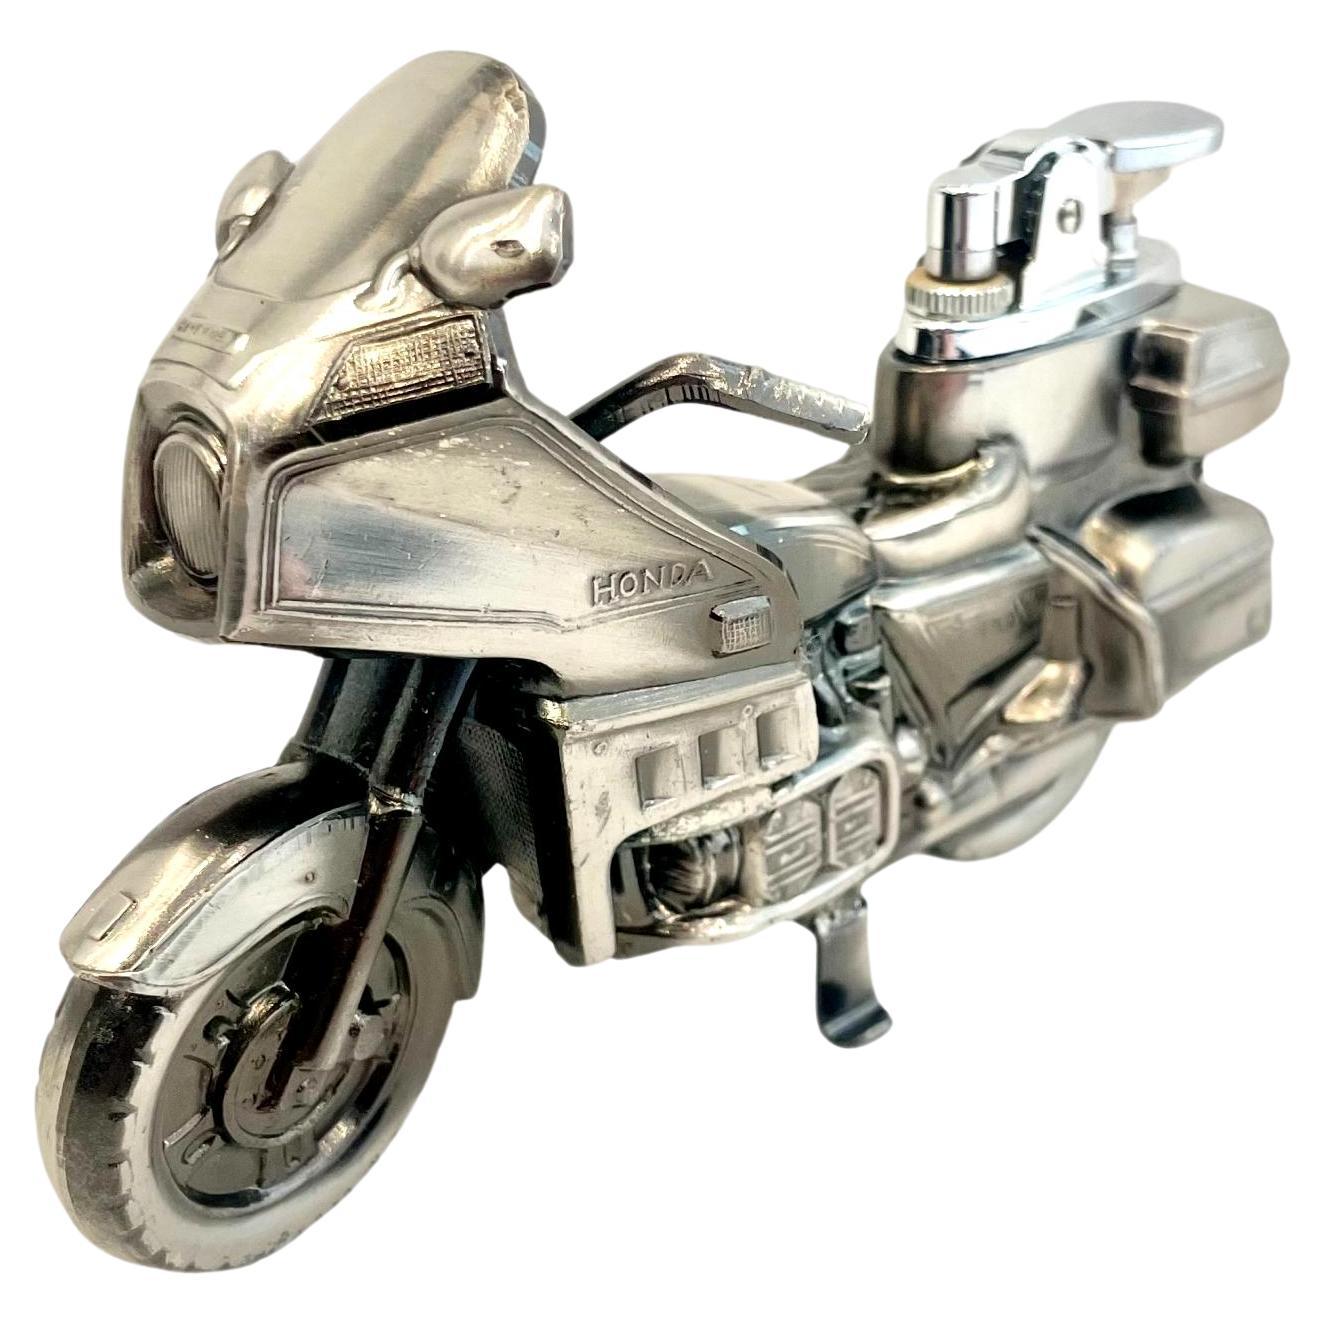 Honda Gold Wing Motorcycle Lighter, 1980s Japan For Sale